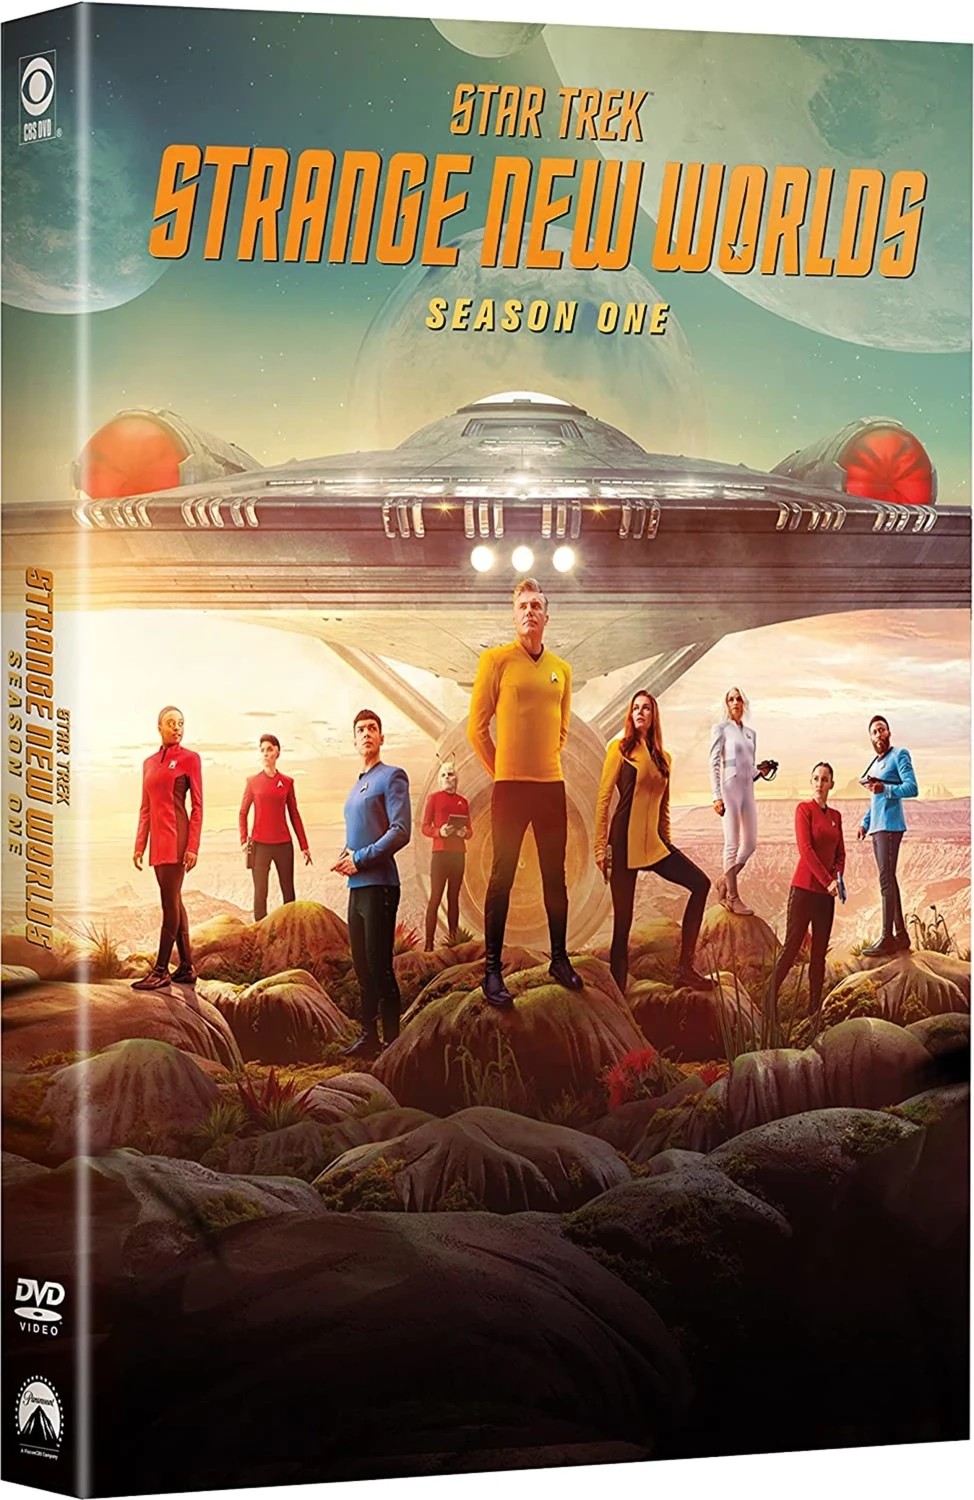 Star Trek: Strange New Worlds Season One 
(7 day Dvd rental)